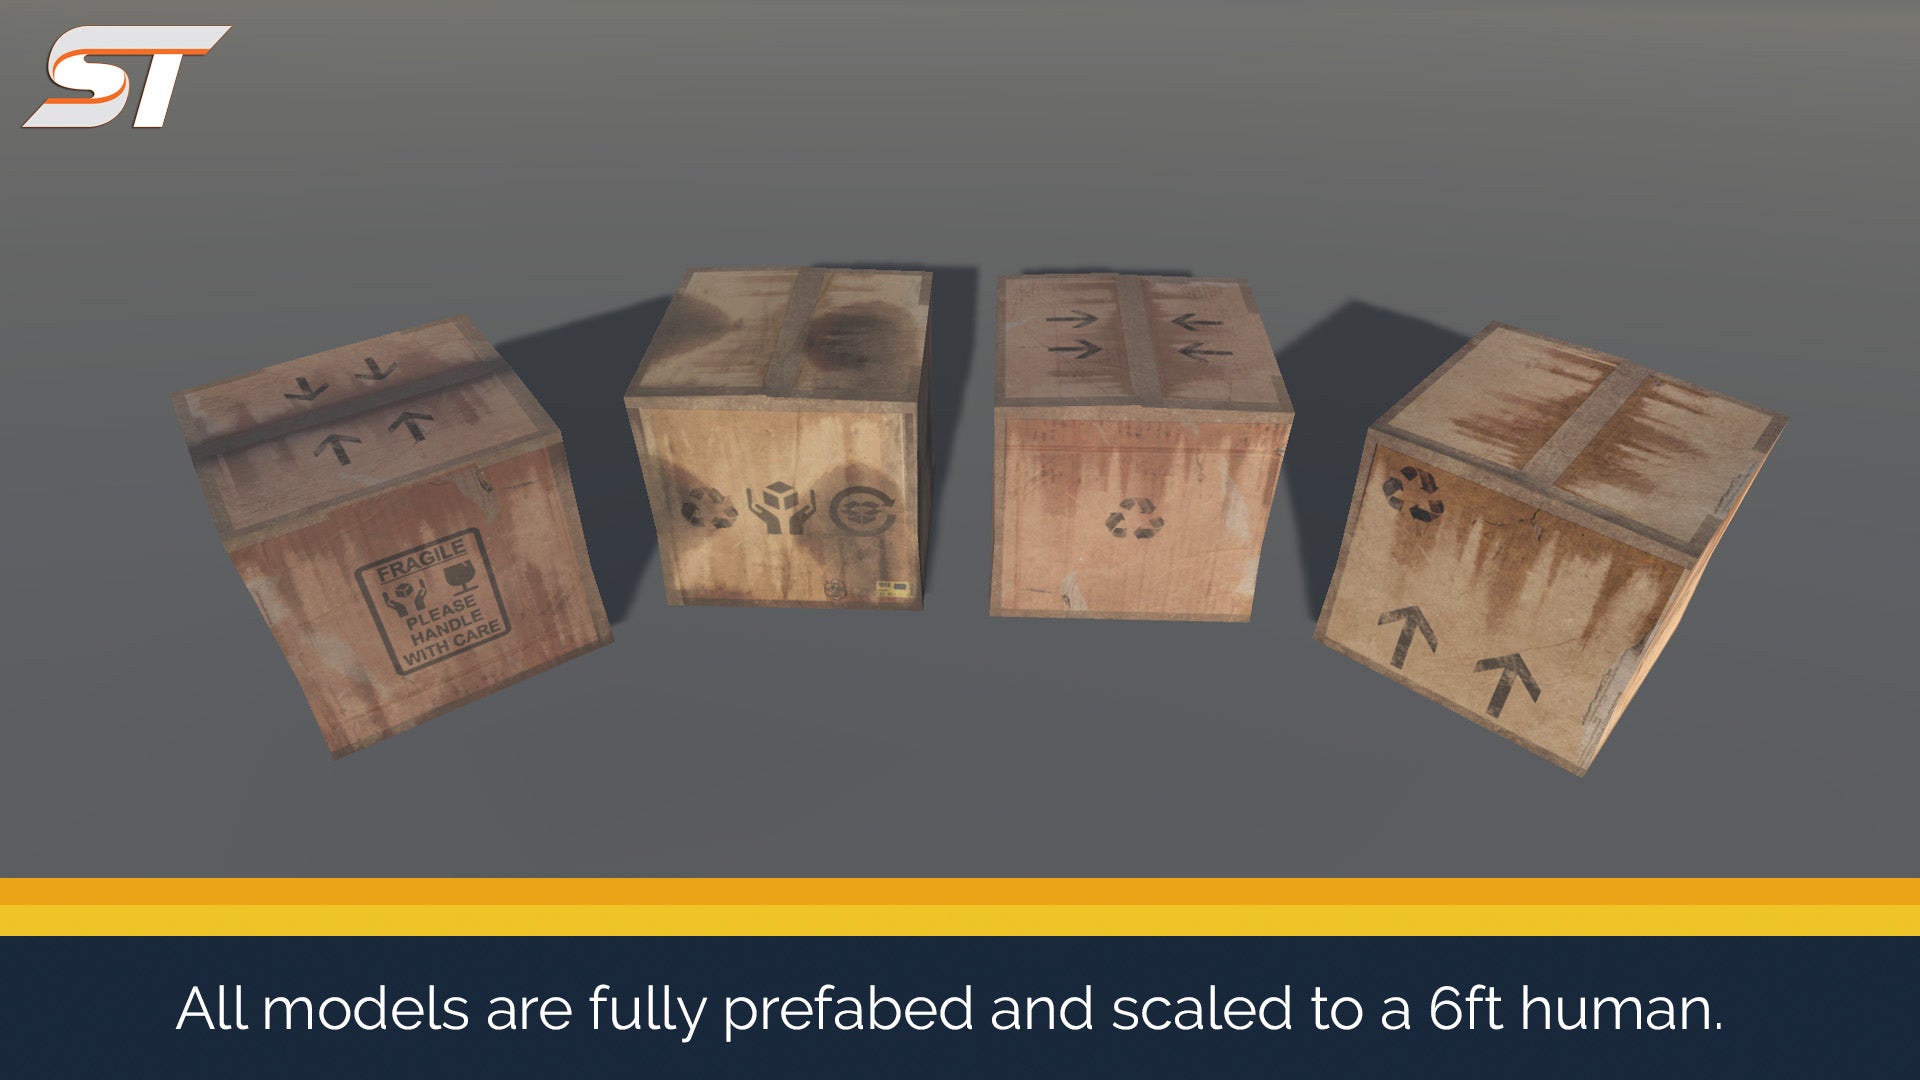 screenshot of 4 cardboard boxes